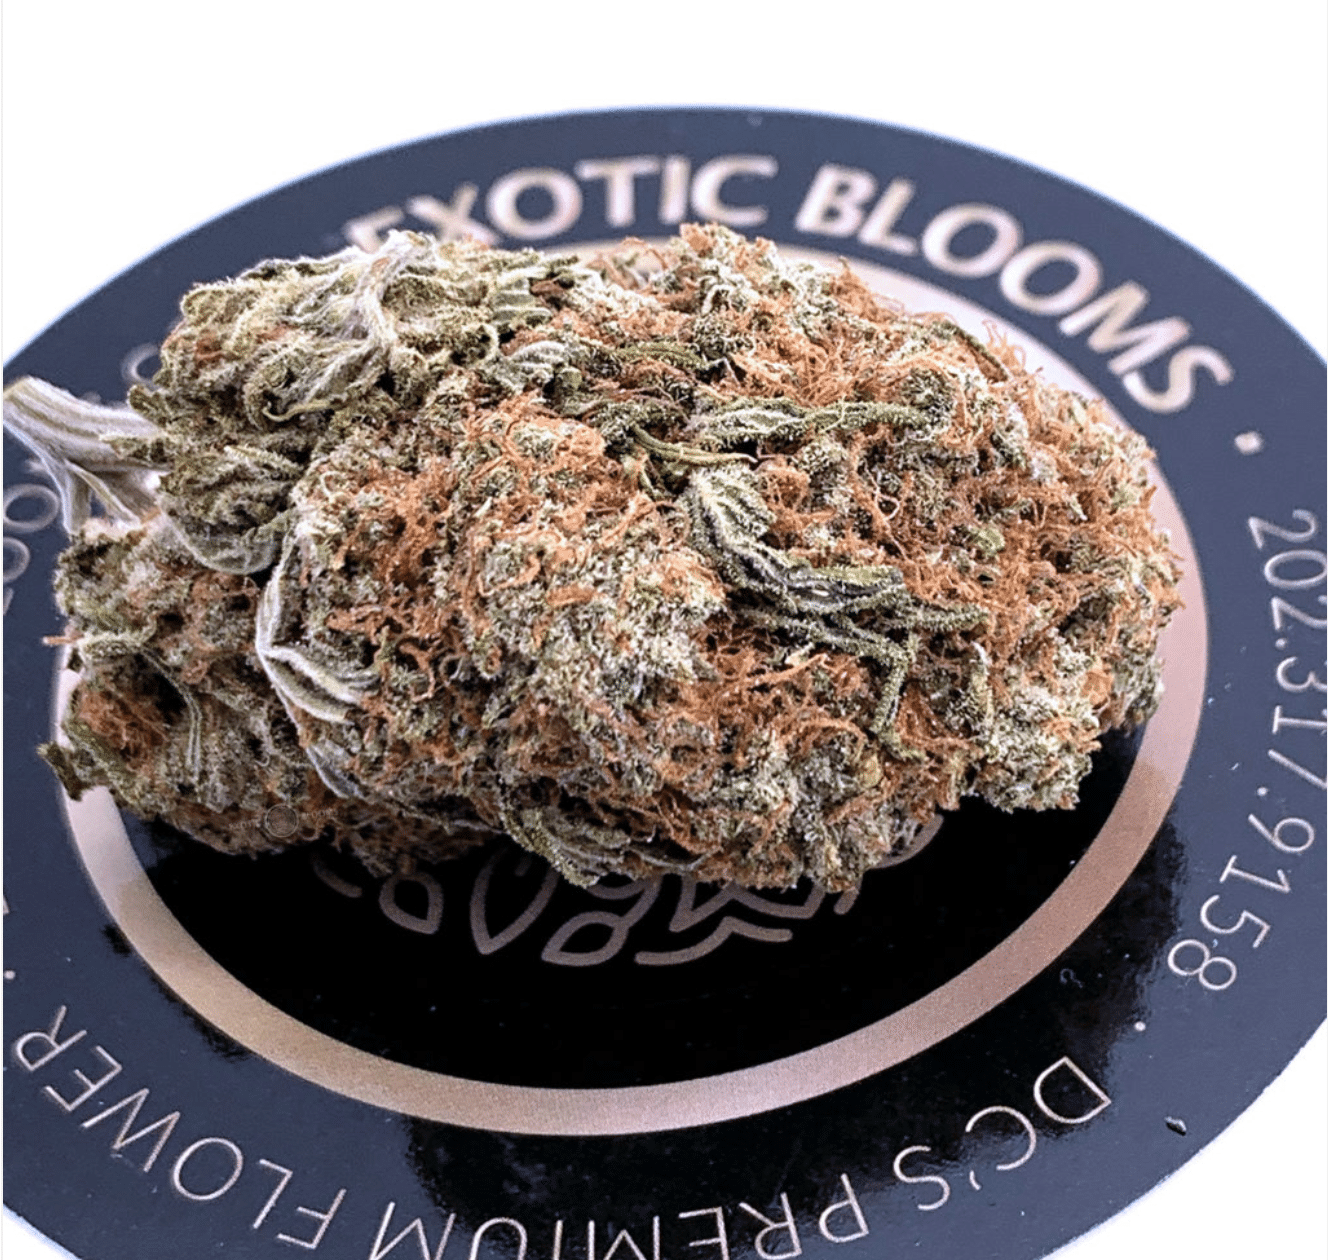 exotic blooms dc white shark og marijuana flowers image